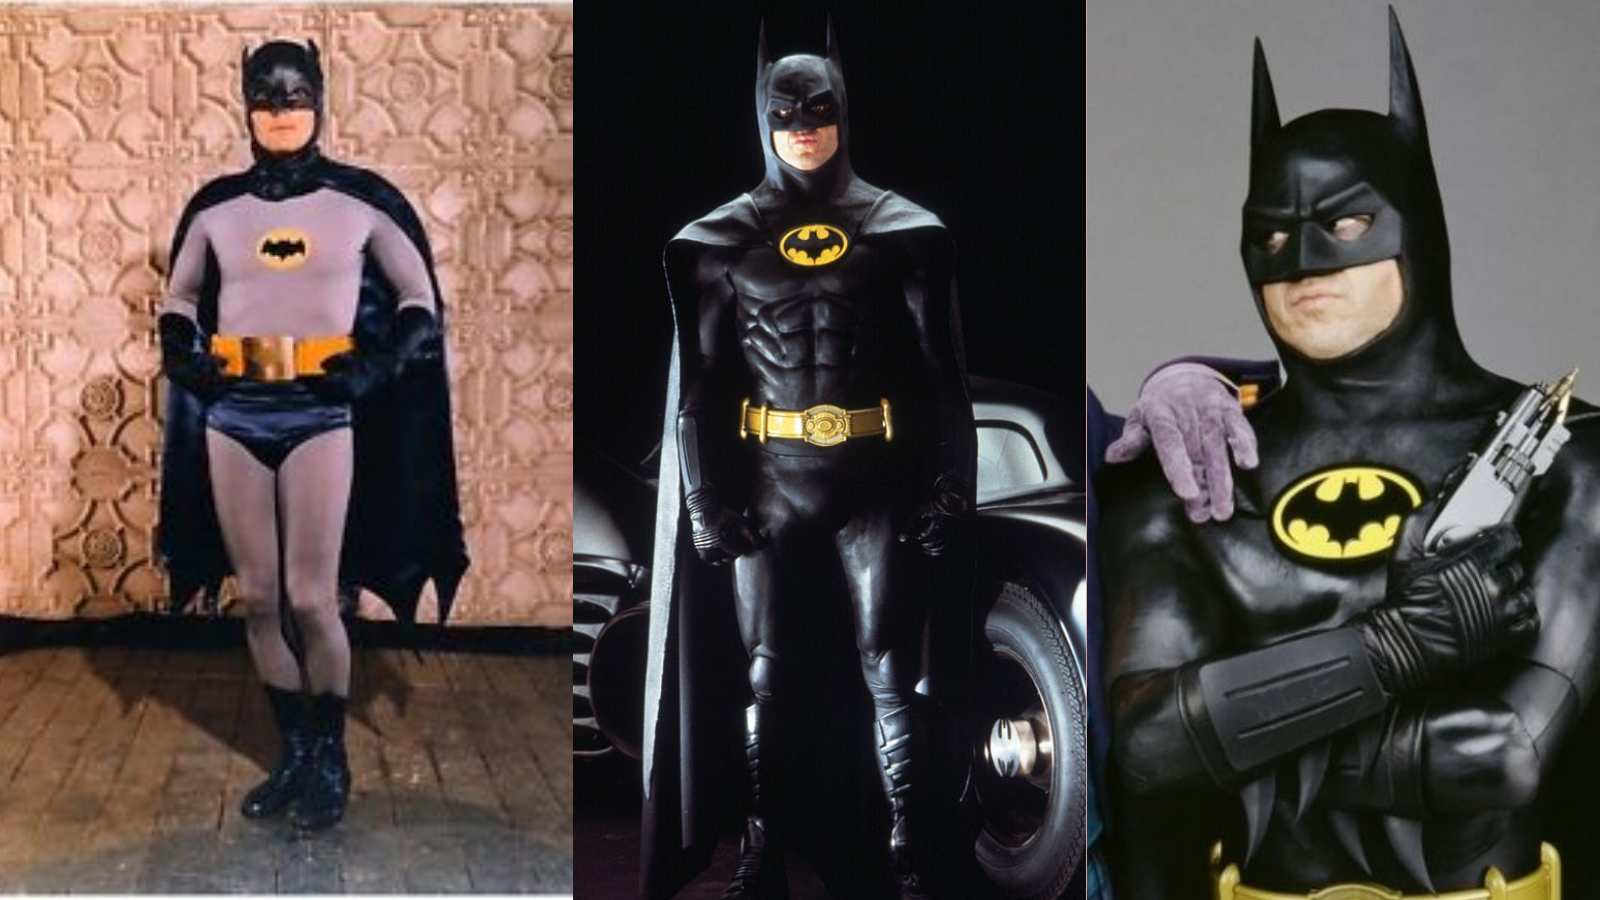 Batman Suits: Adam West, Michael Keaton, and George Clooney